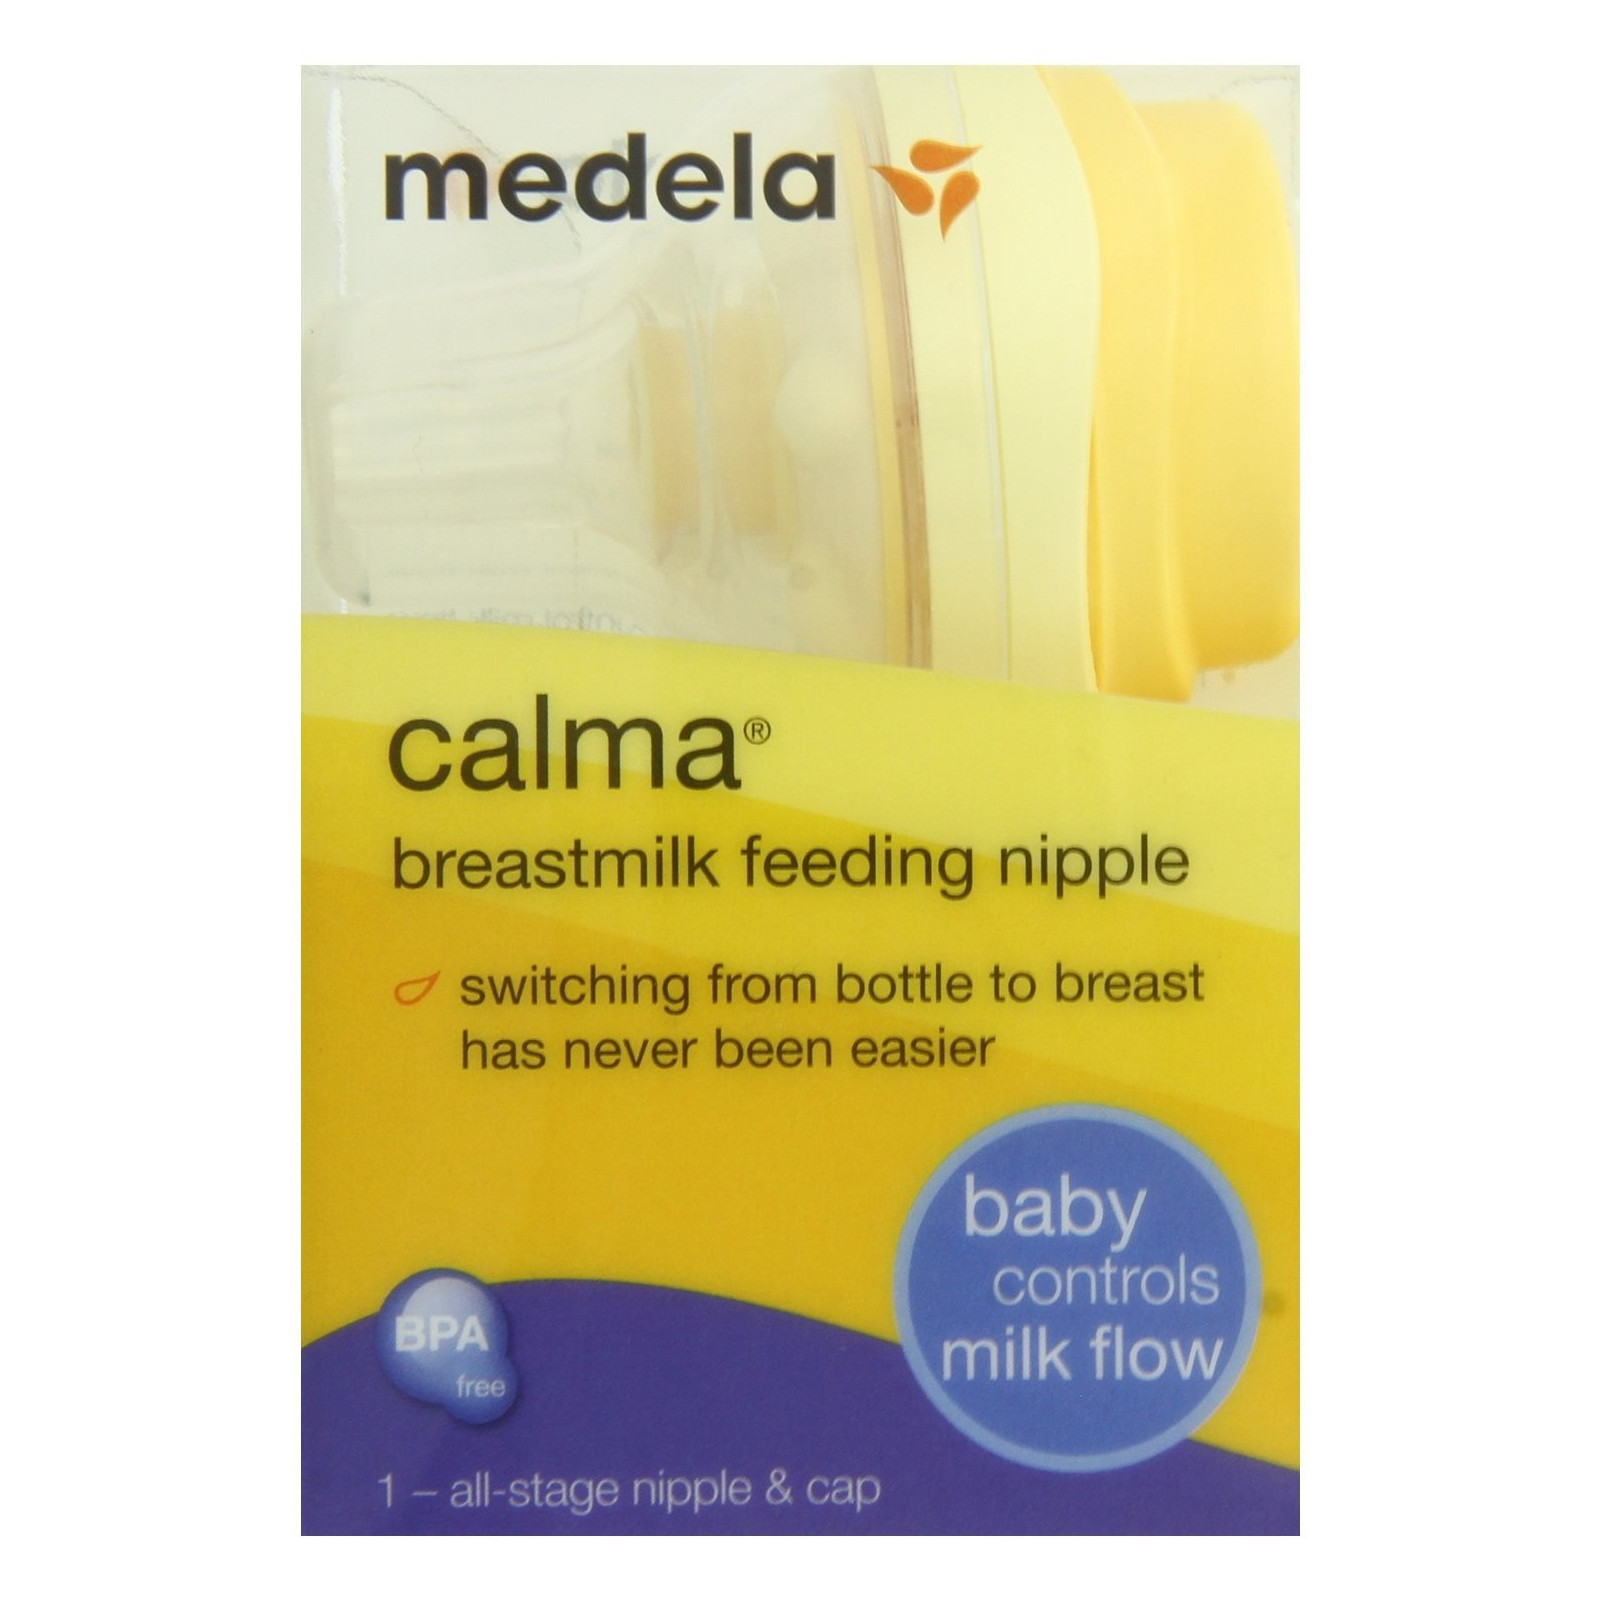 Medela Calma Breastmilk Feeding Nipple